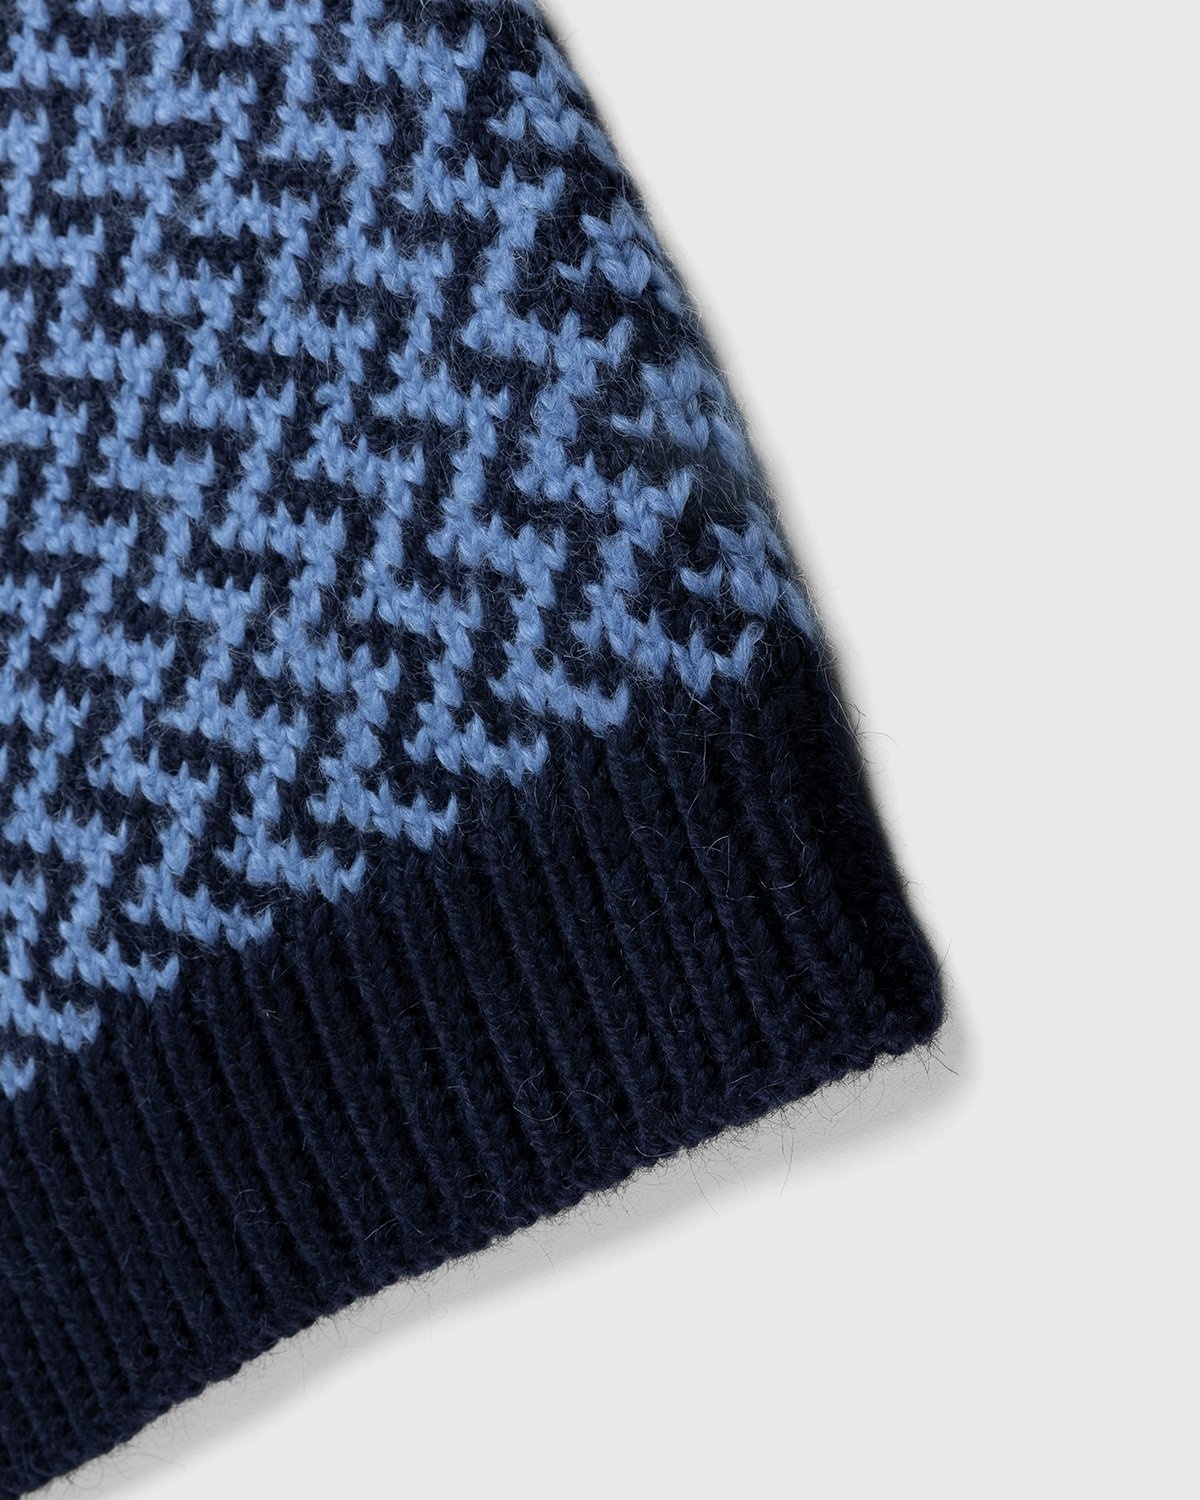 Jil Sander – Vest Knitted Blue | Highsnobiety Shop